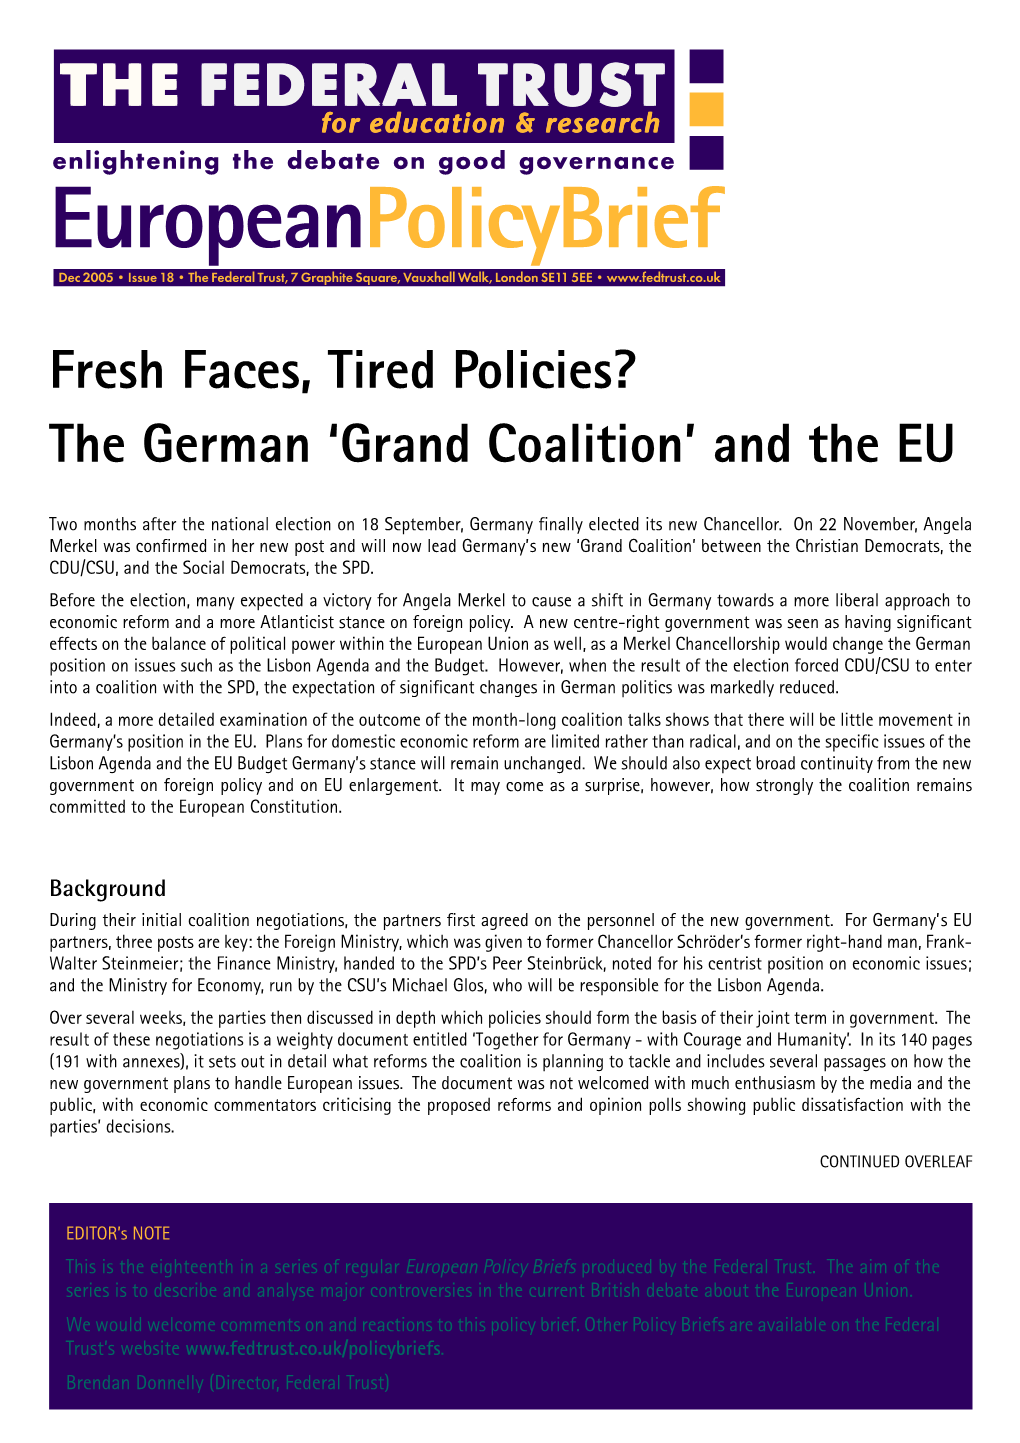 Grand Coalition’ and the EU